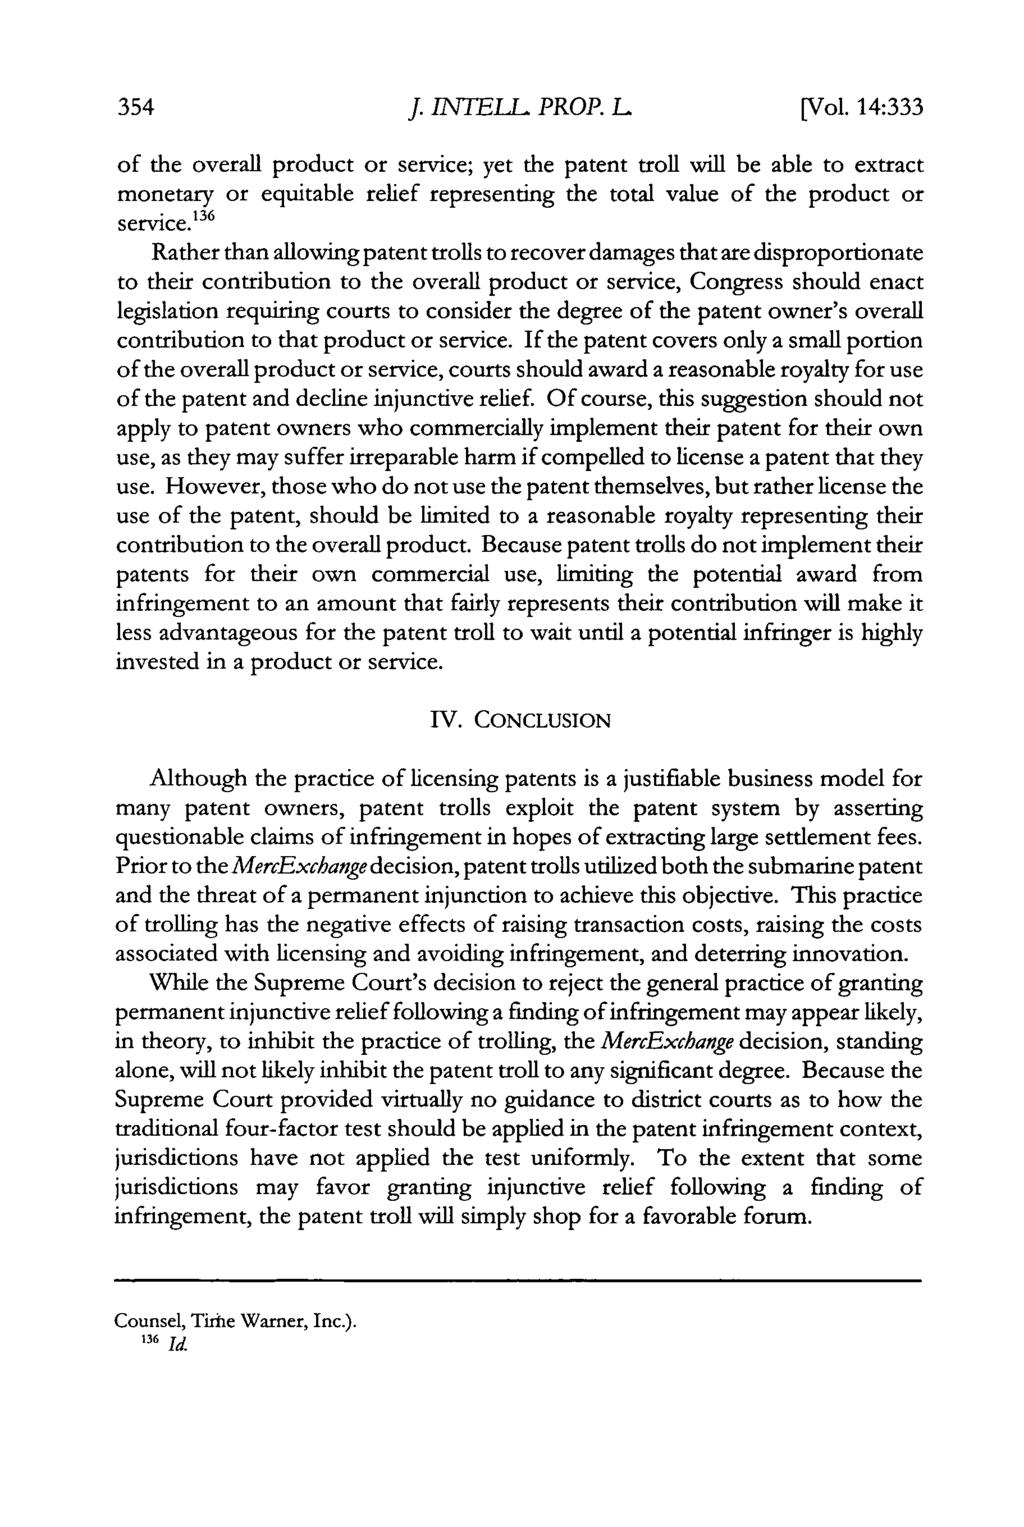 Journal of Intellectual Property Law, Vol. 14, Iss. 2 [2007], Art. 5 J. INTELL PROP. L[ [Vol.